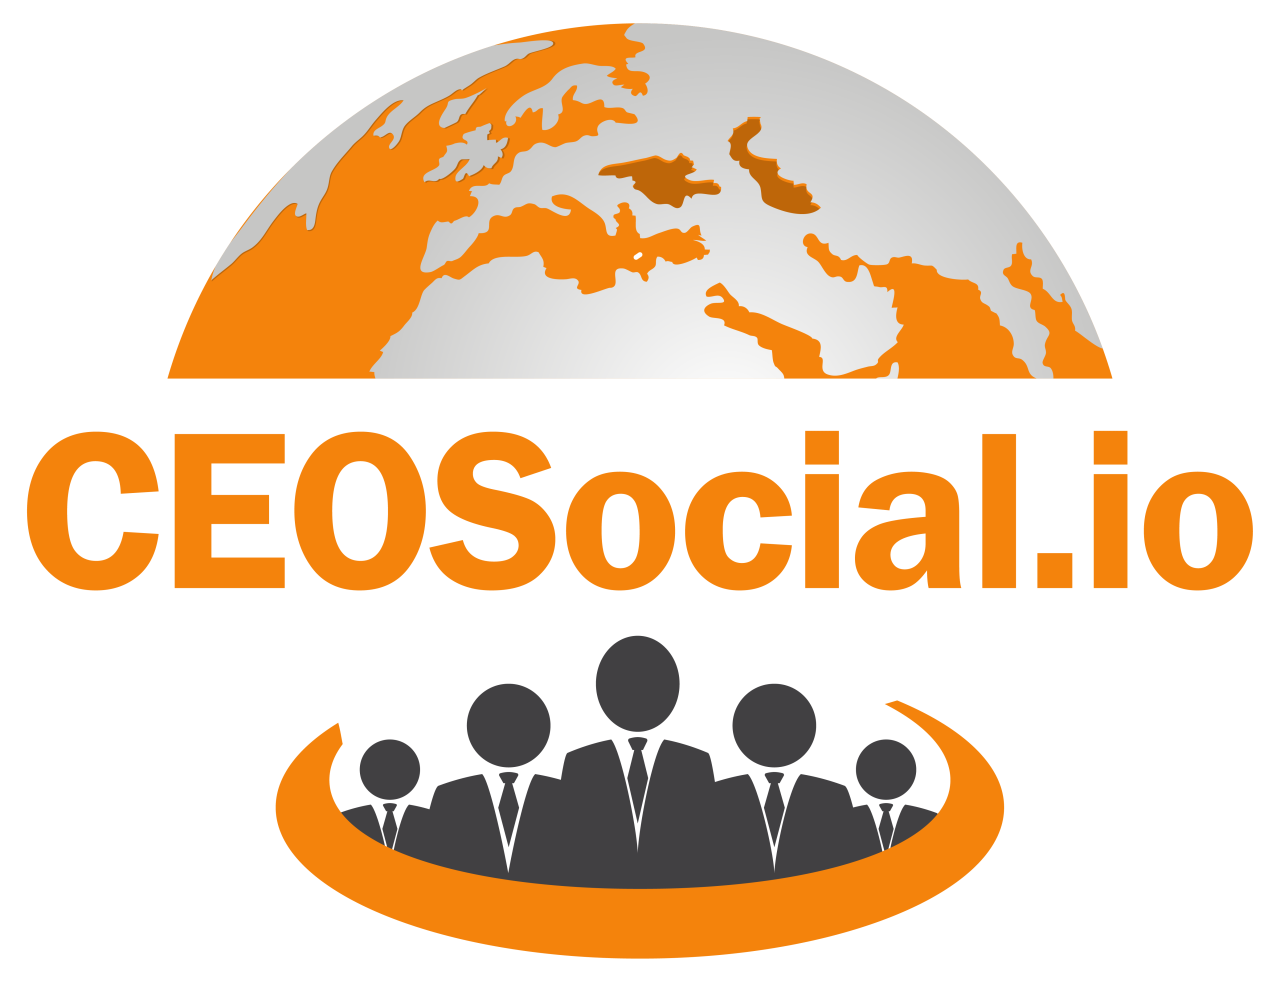 CEOSocial.io's web page